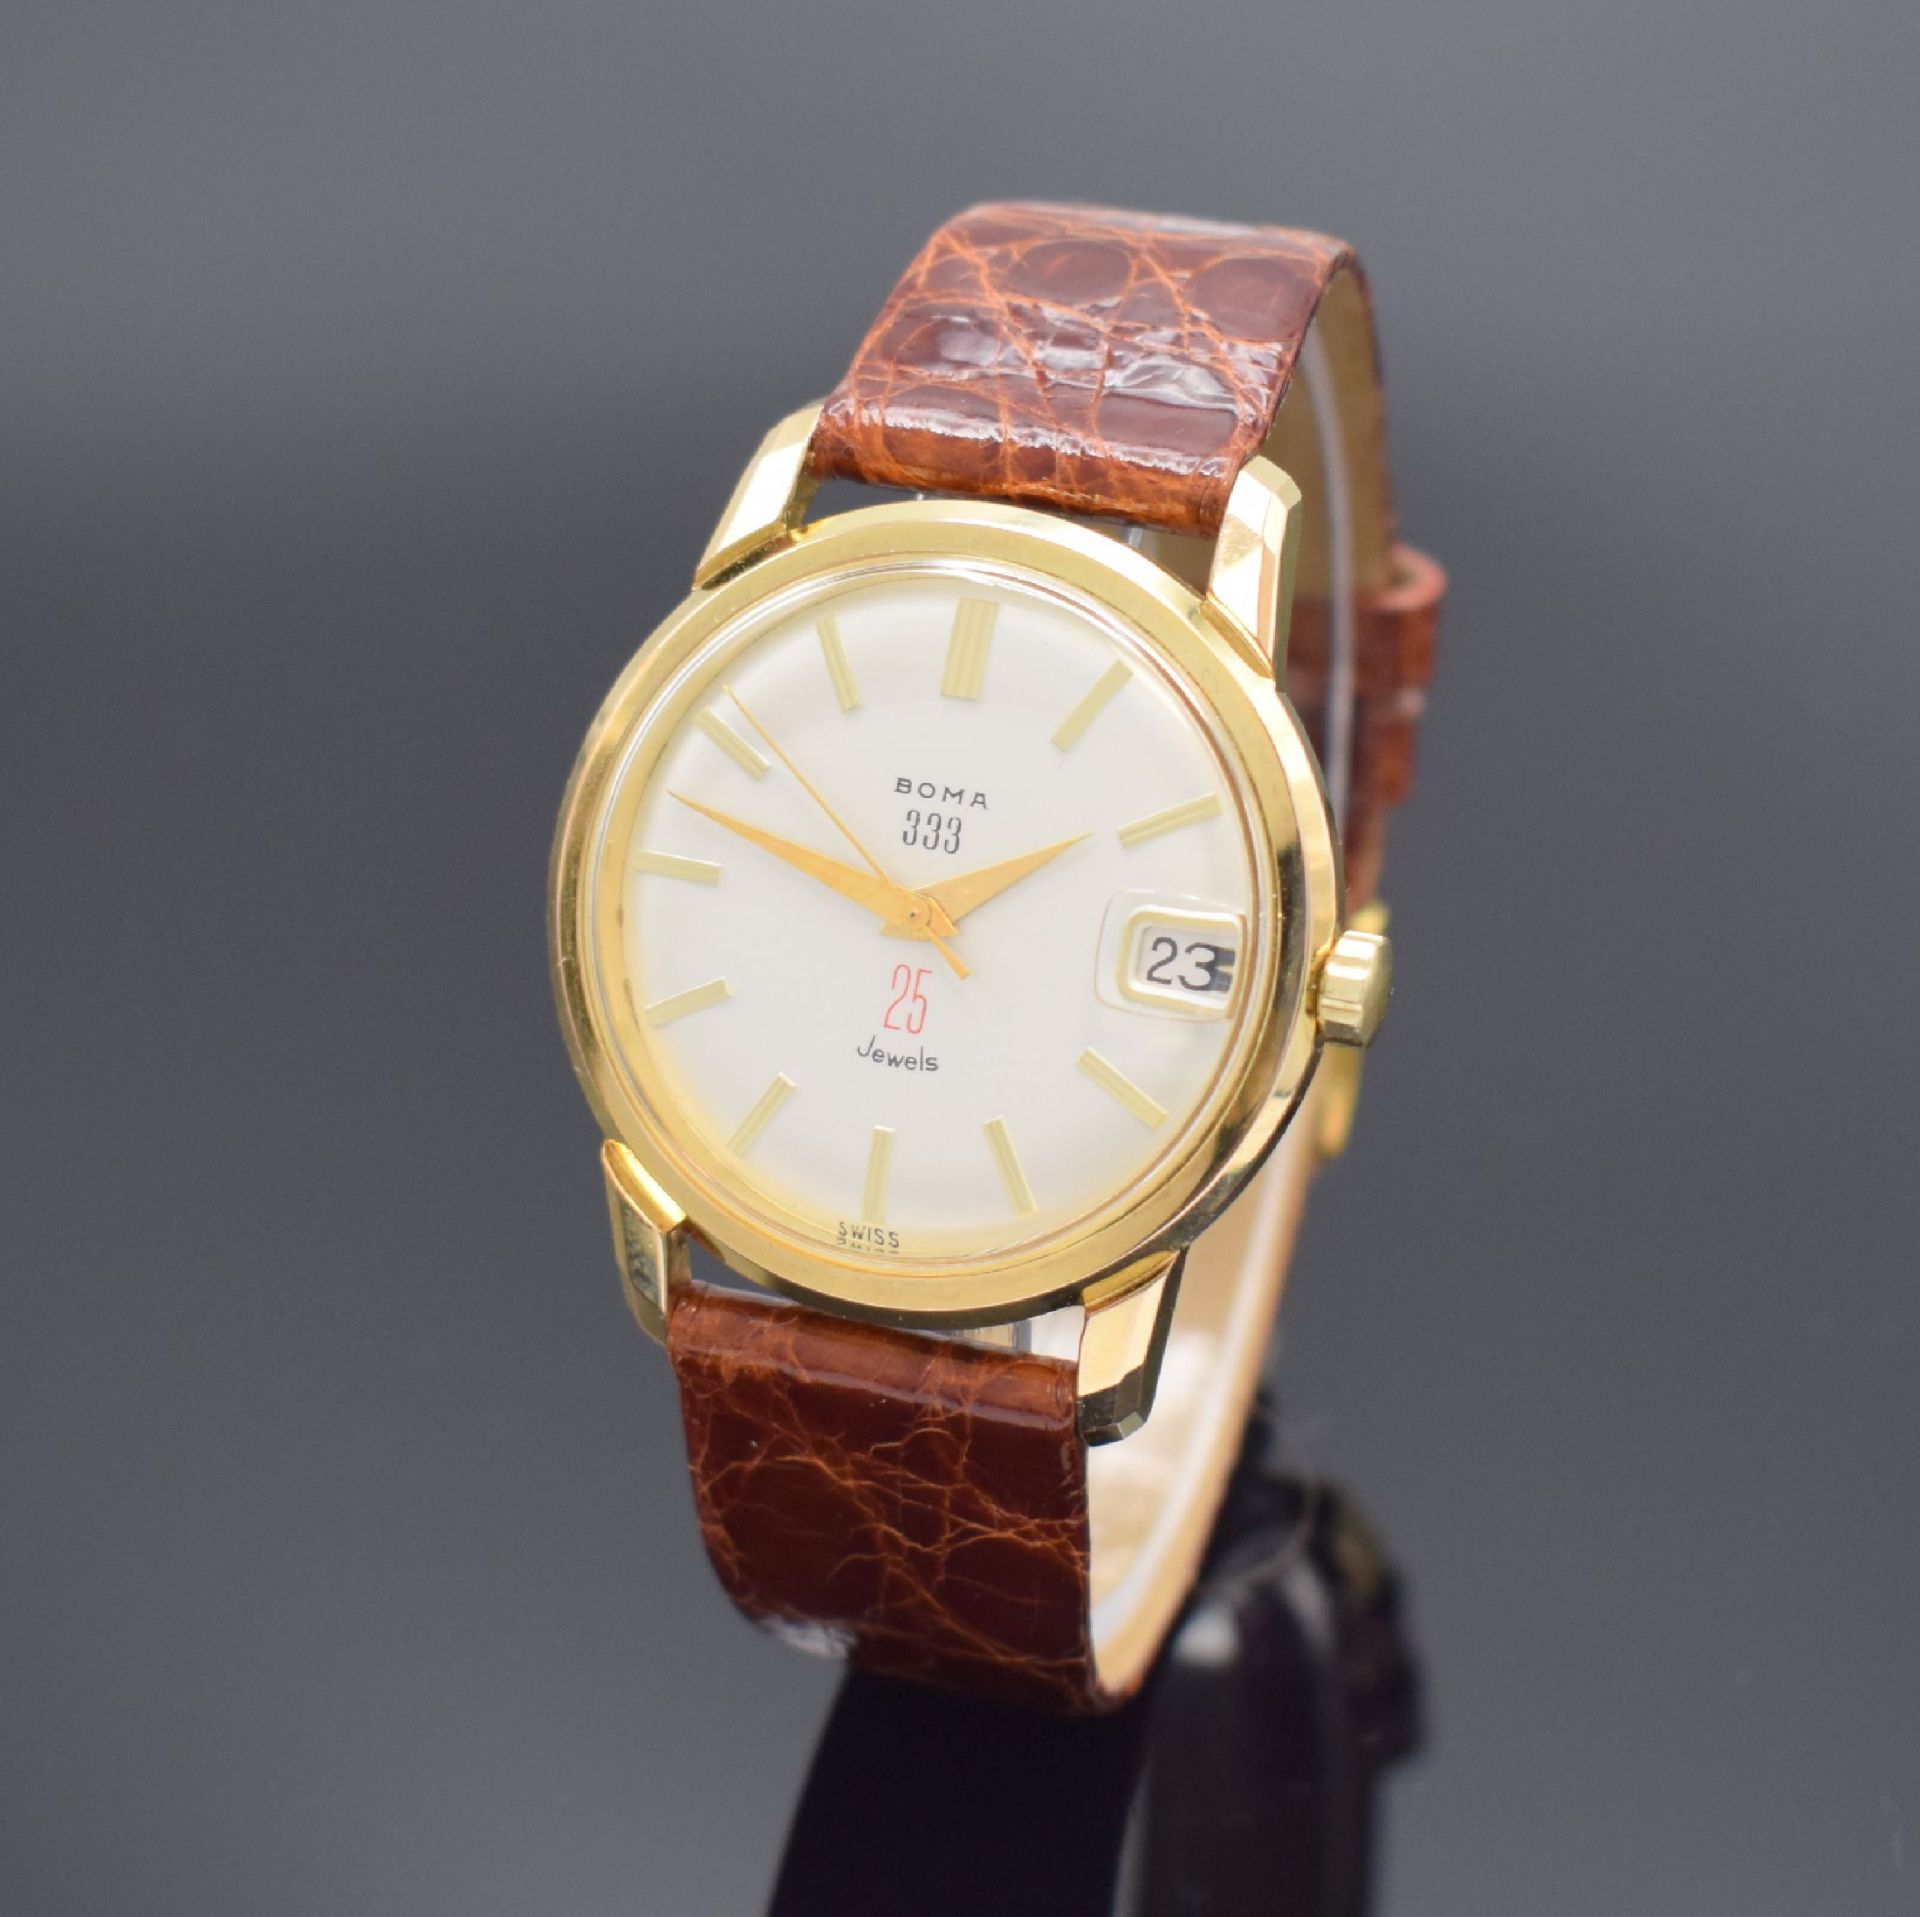 SANDOZ / BOMA 333 Armbanduhr mit seltenem Automatikwerk